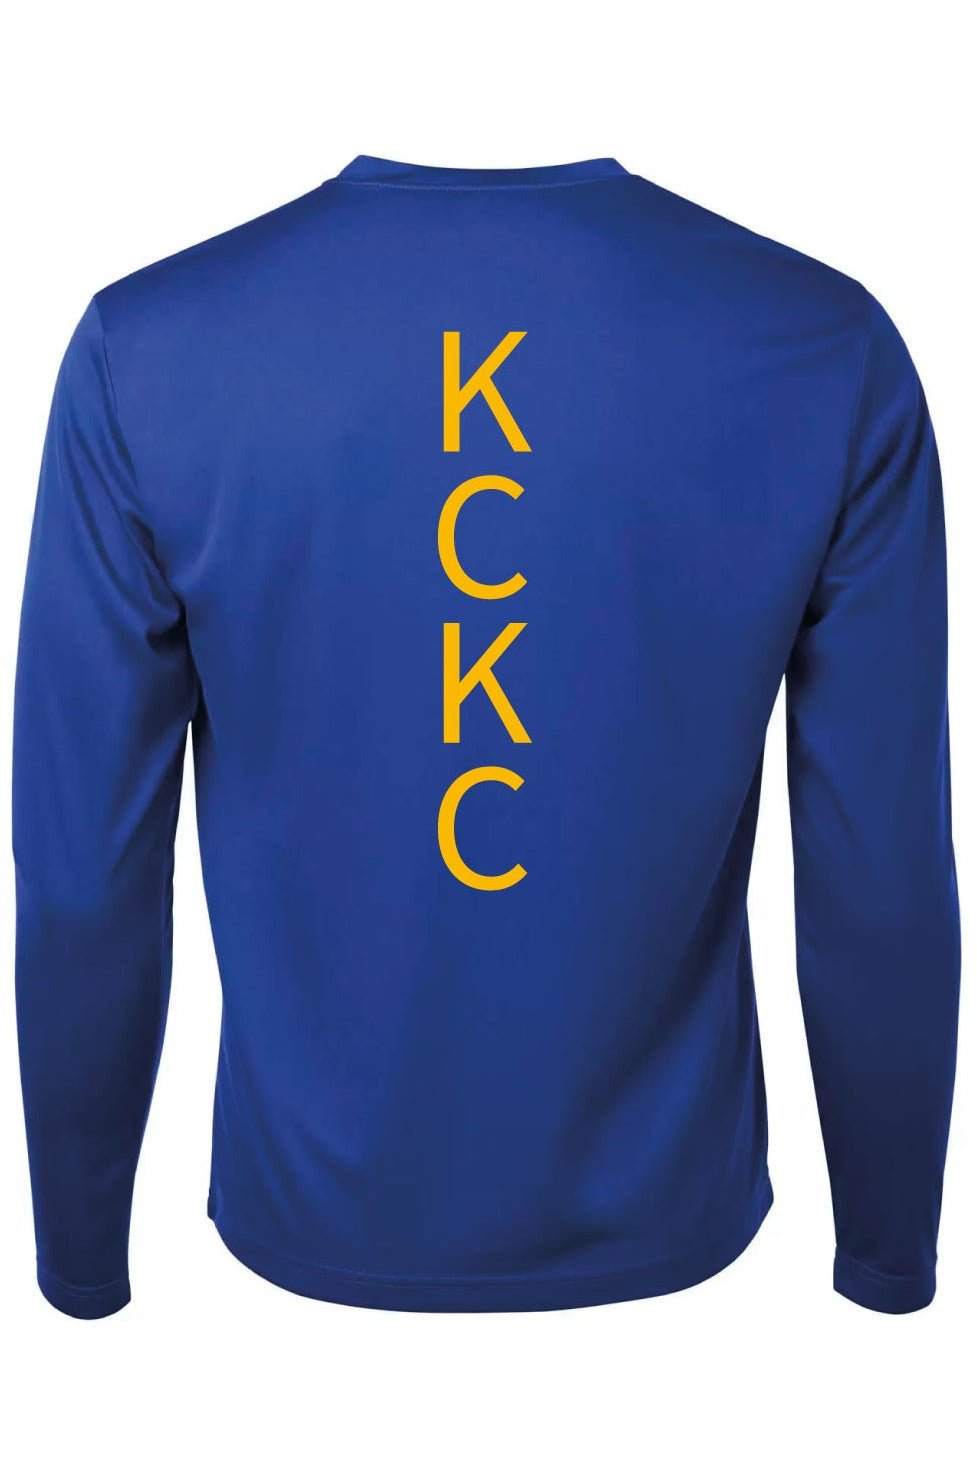 KCKC Youth Pro Team Longsleeve (Left Chest Logo & Spine Logo) - Oddball Workshop